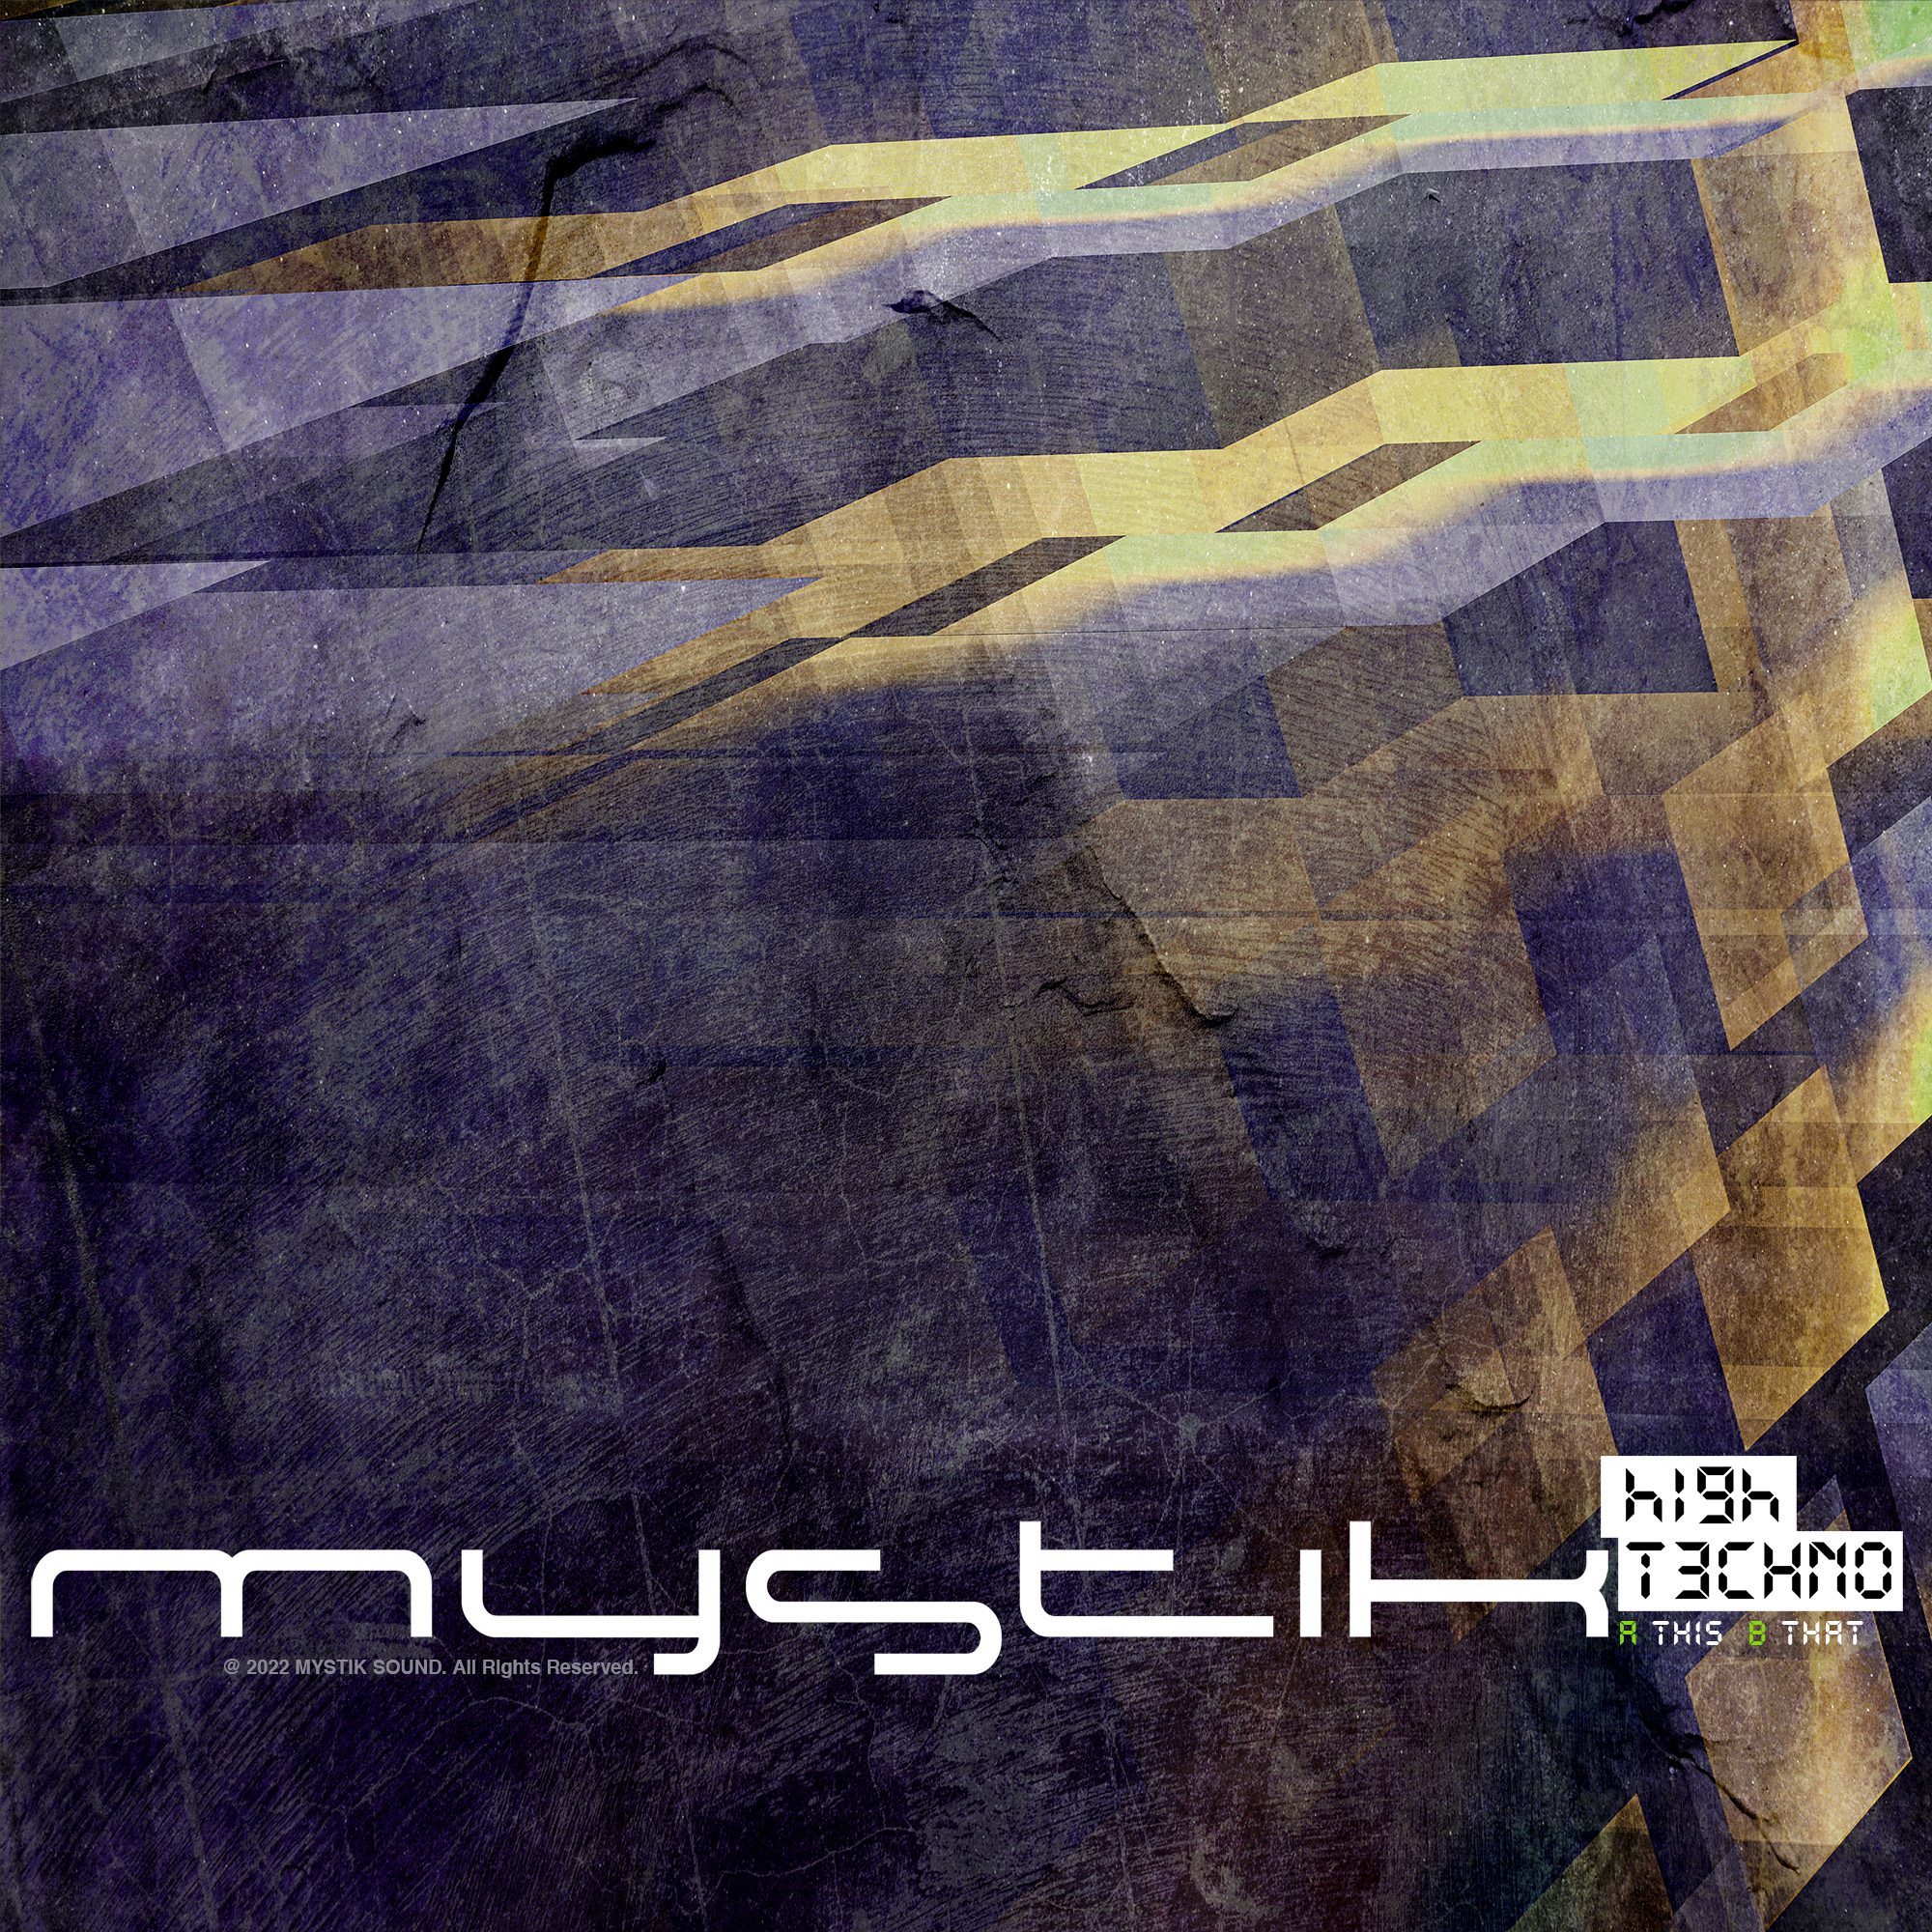 Mystik - High T3chno EP Cover